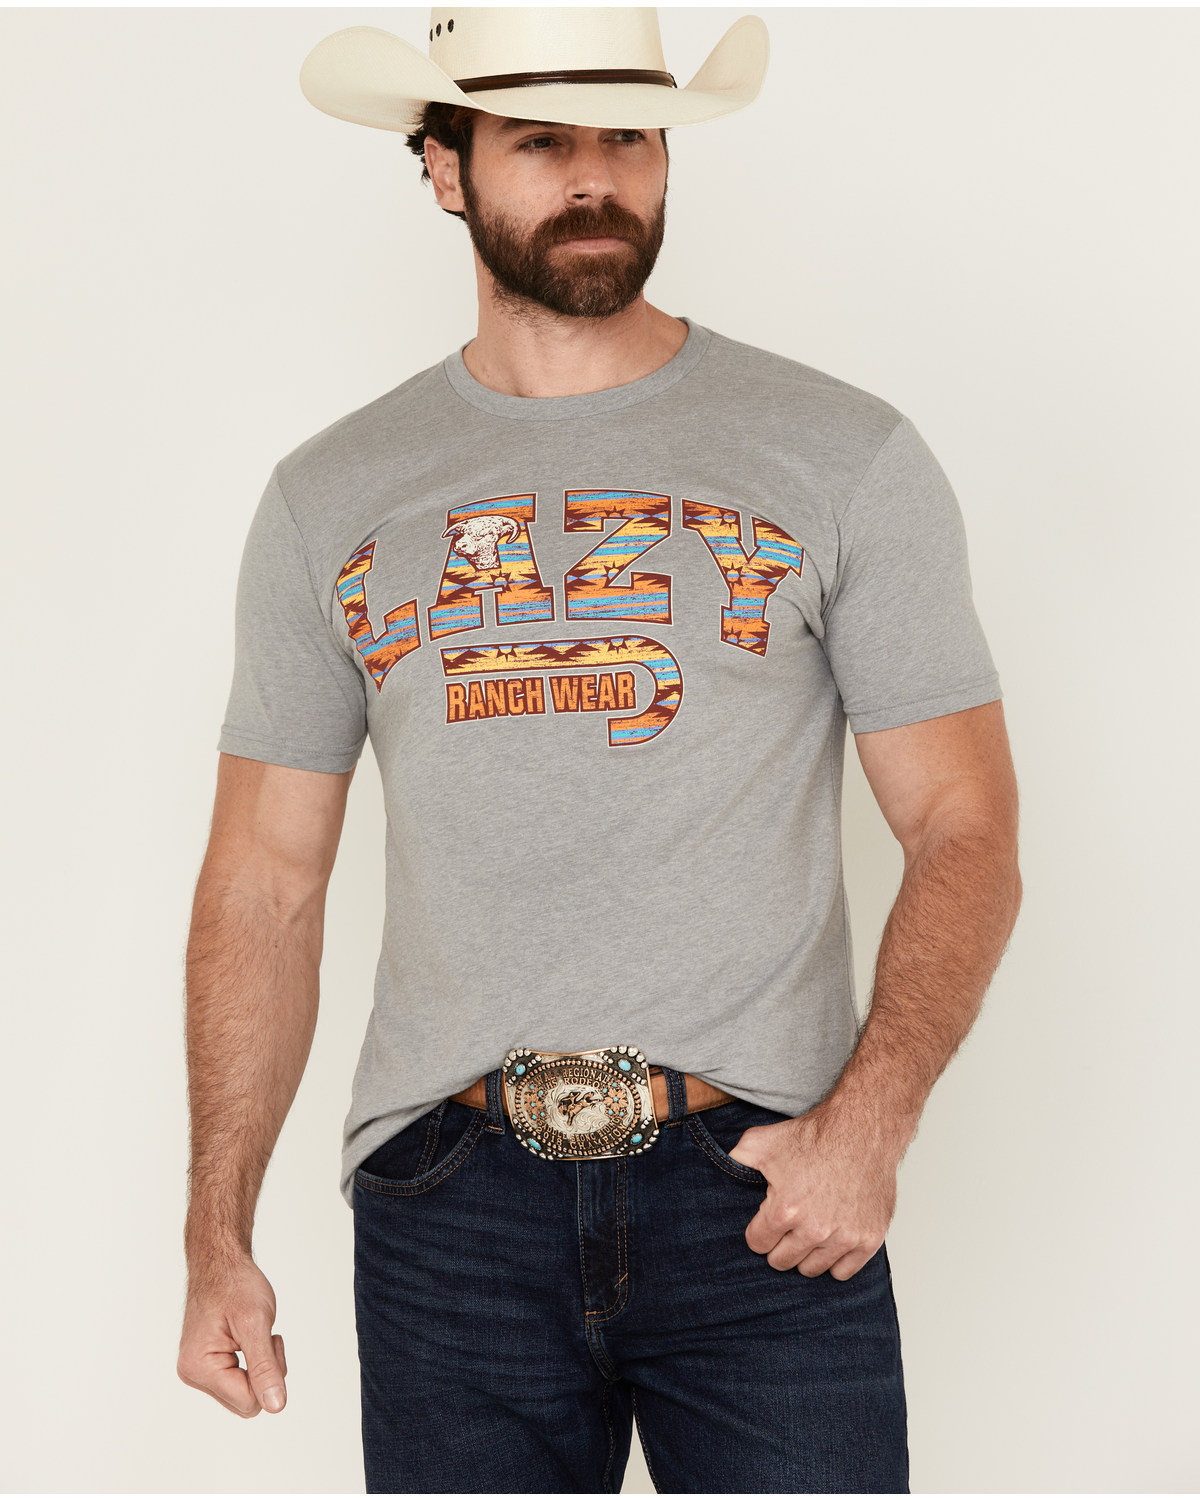 Lazy J Ranch Wear Men's Southwestern Fill Logo Short Sleeve Graphic T-Shirt